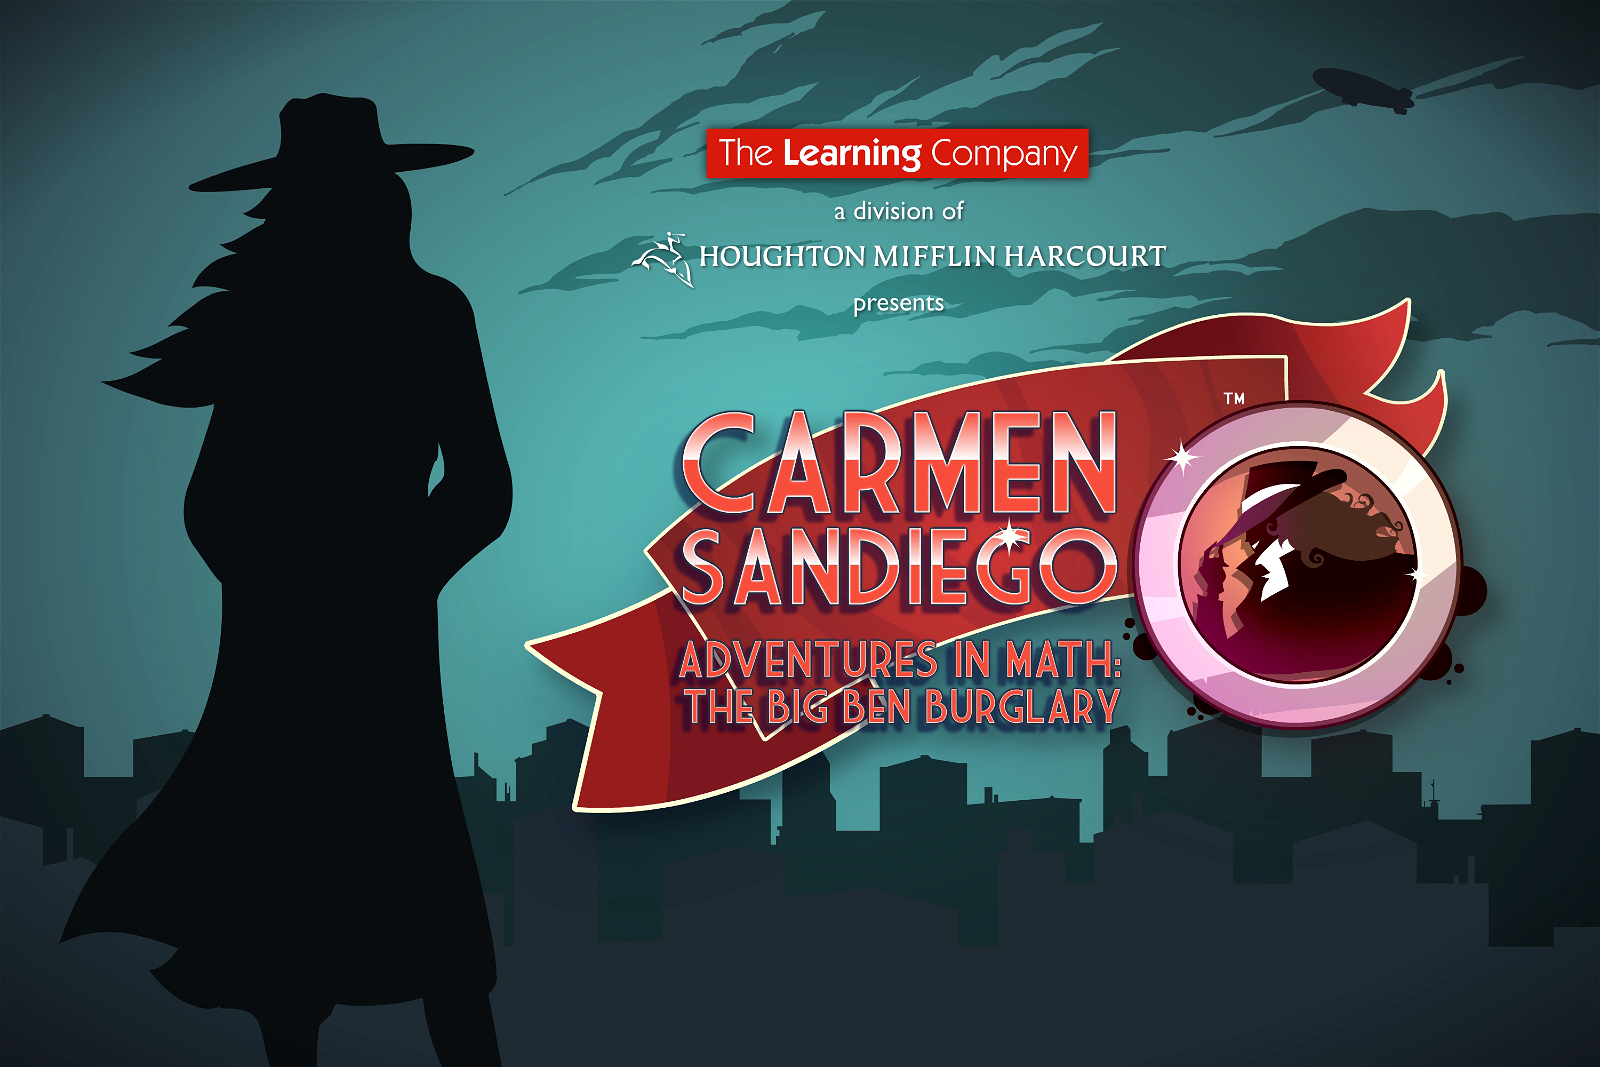 Image of Carmen Sandiego Adventures in Math: The Big Ben Burglary